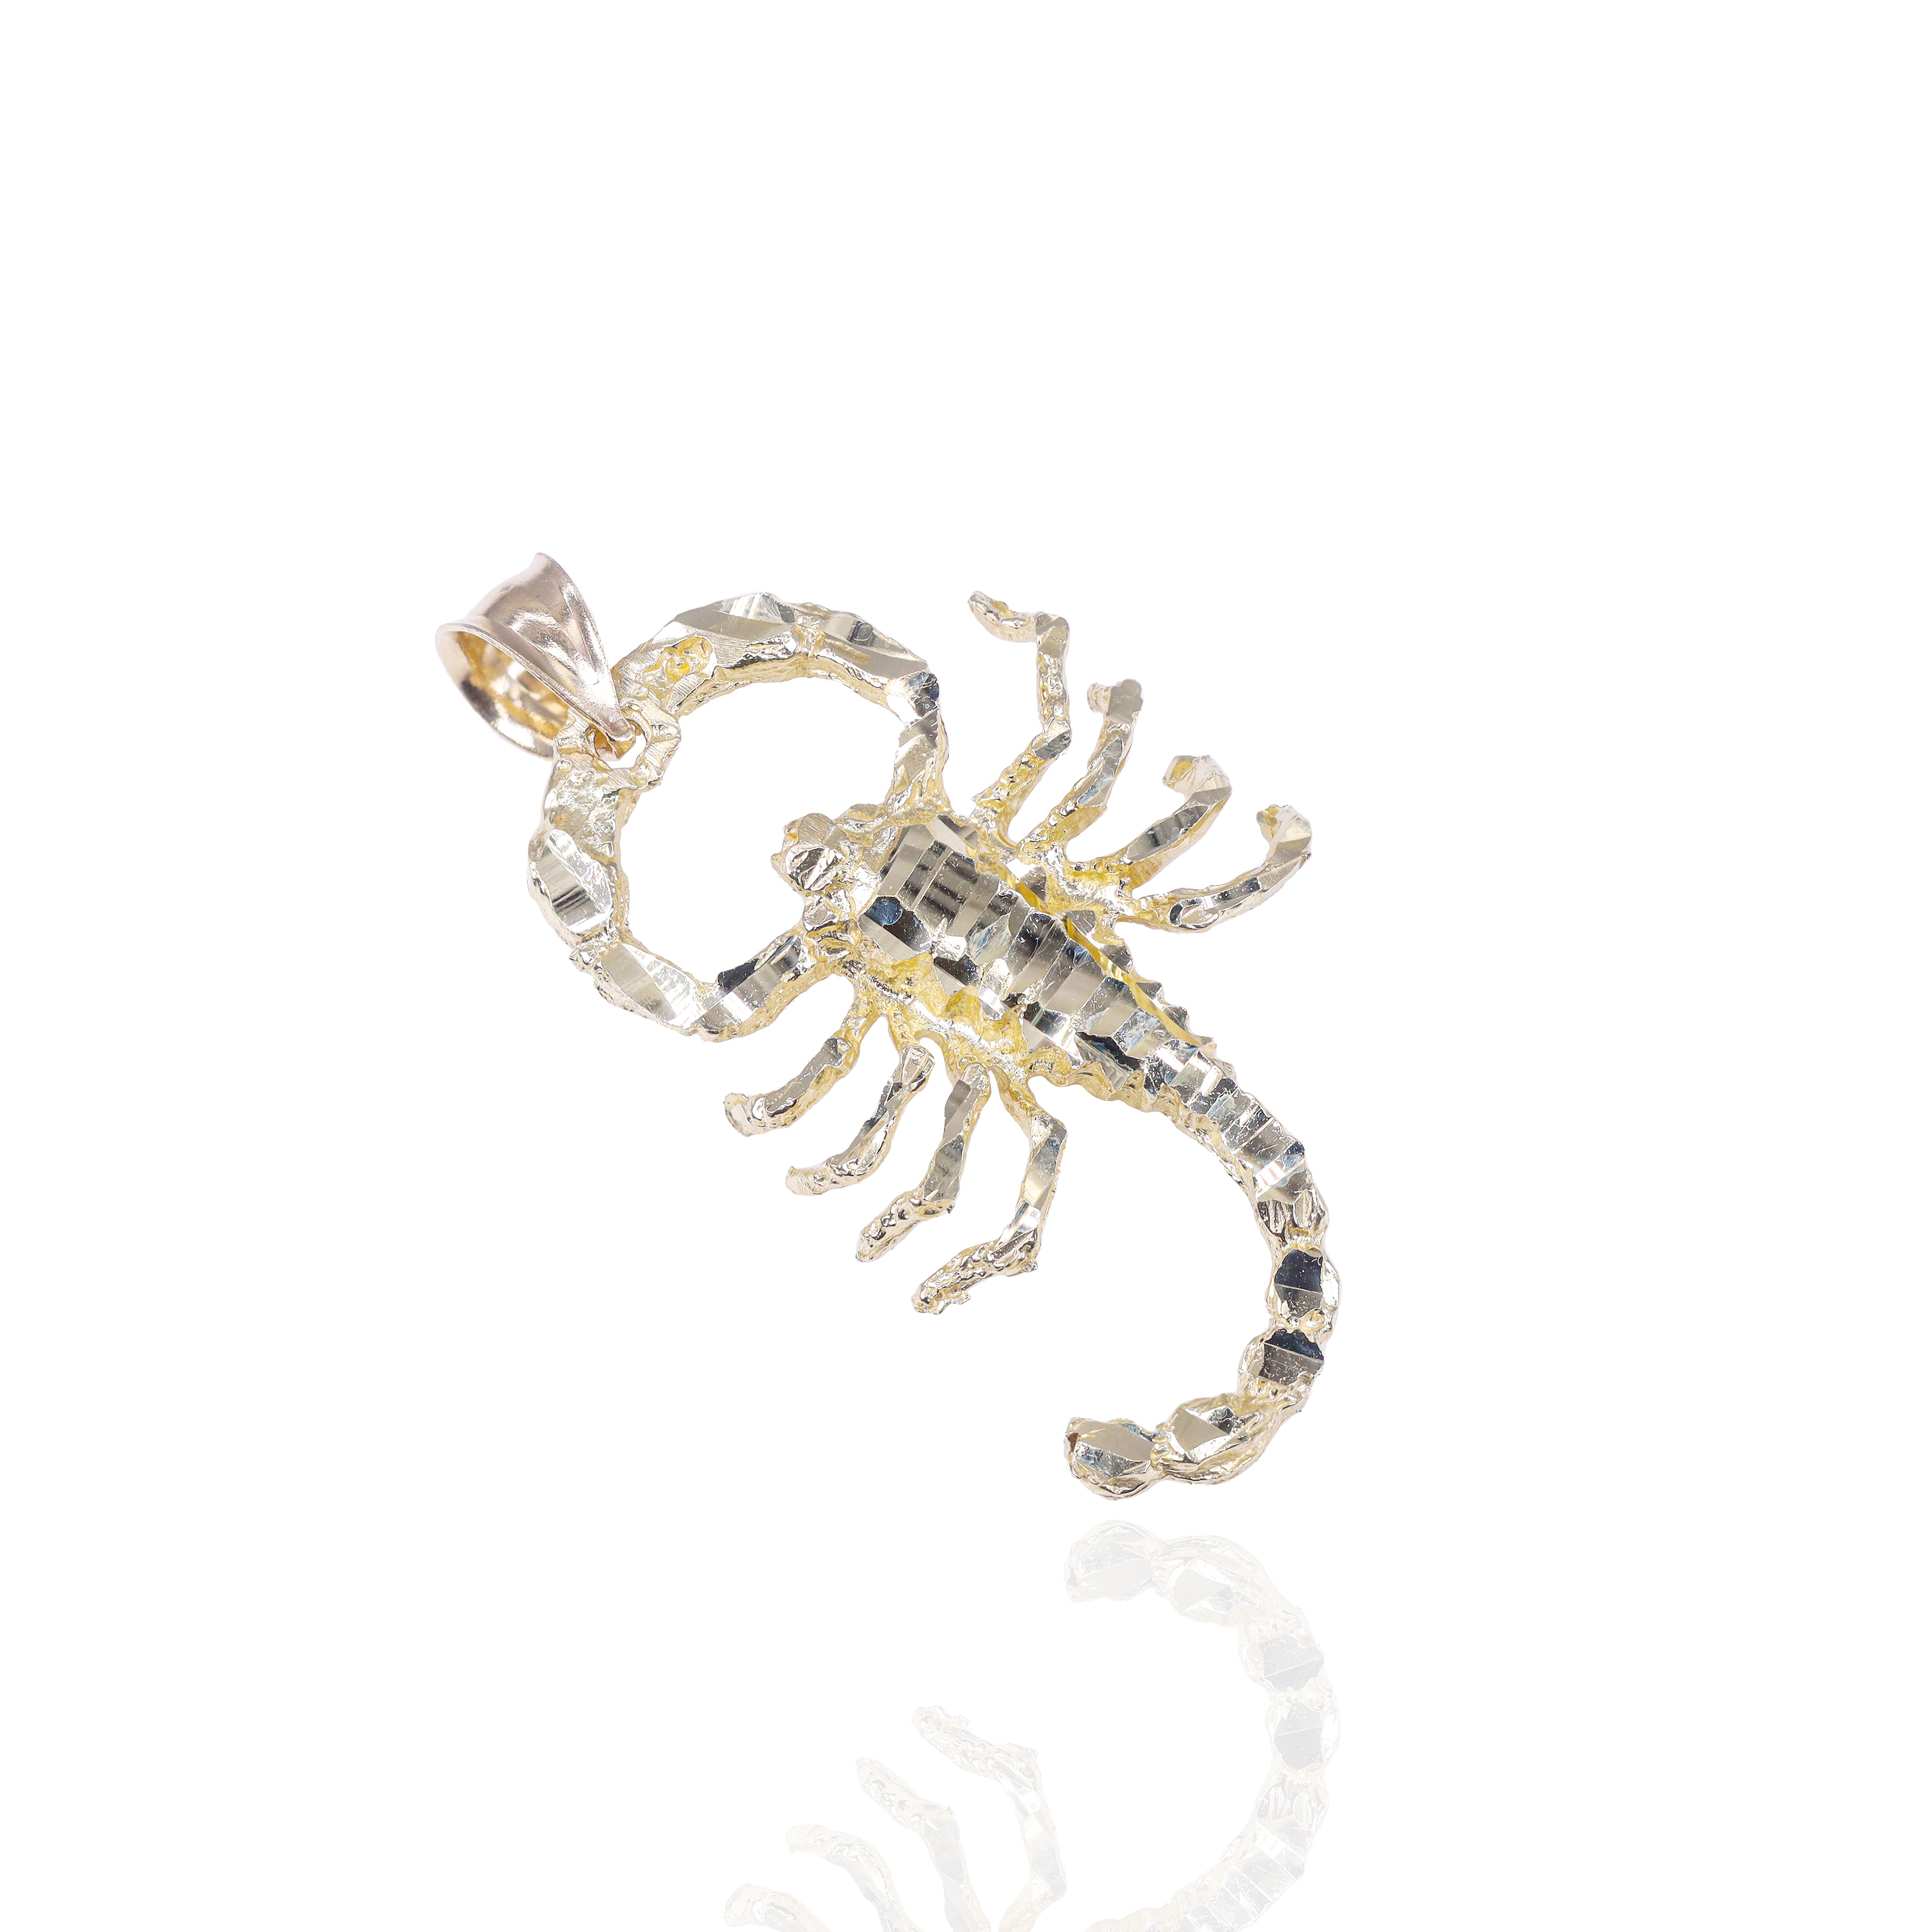 Solid Gold Scorpion Pendant